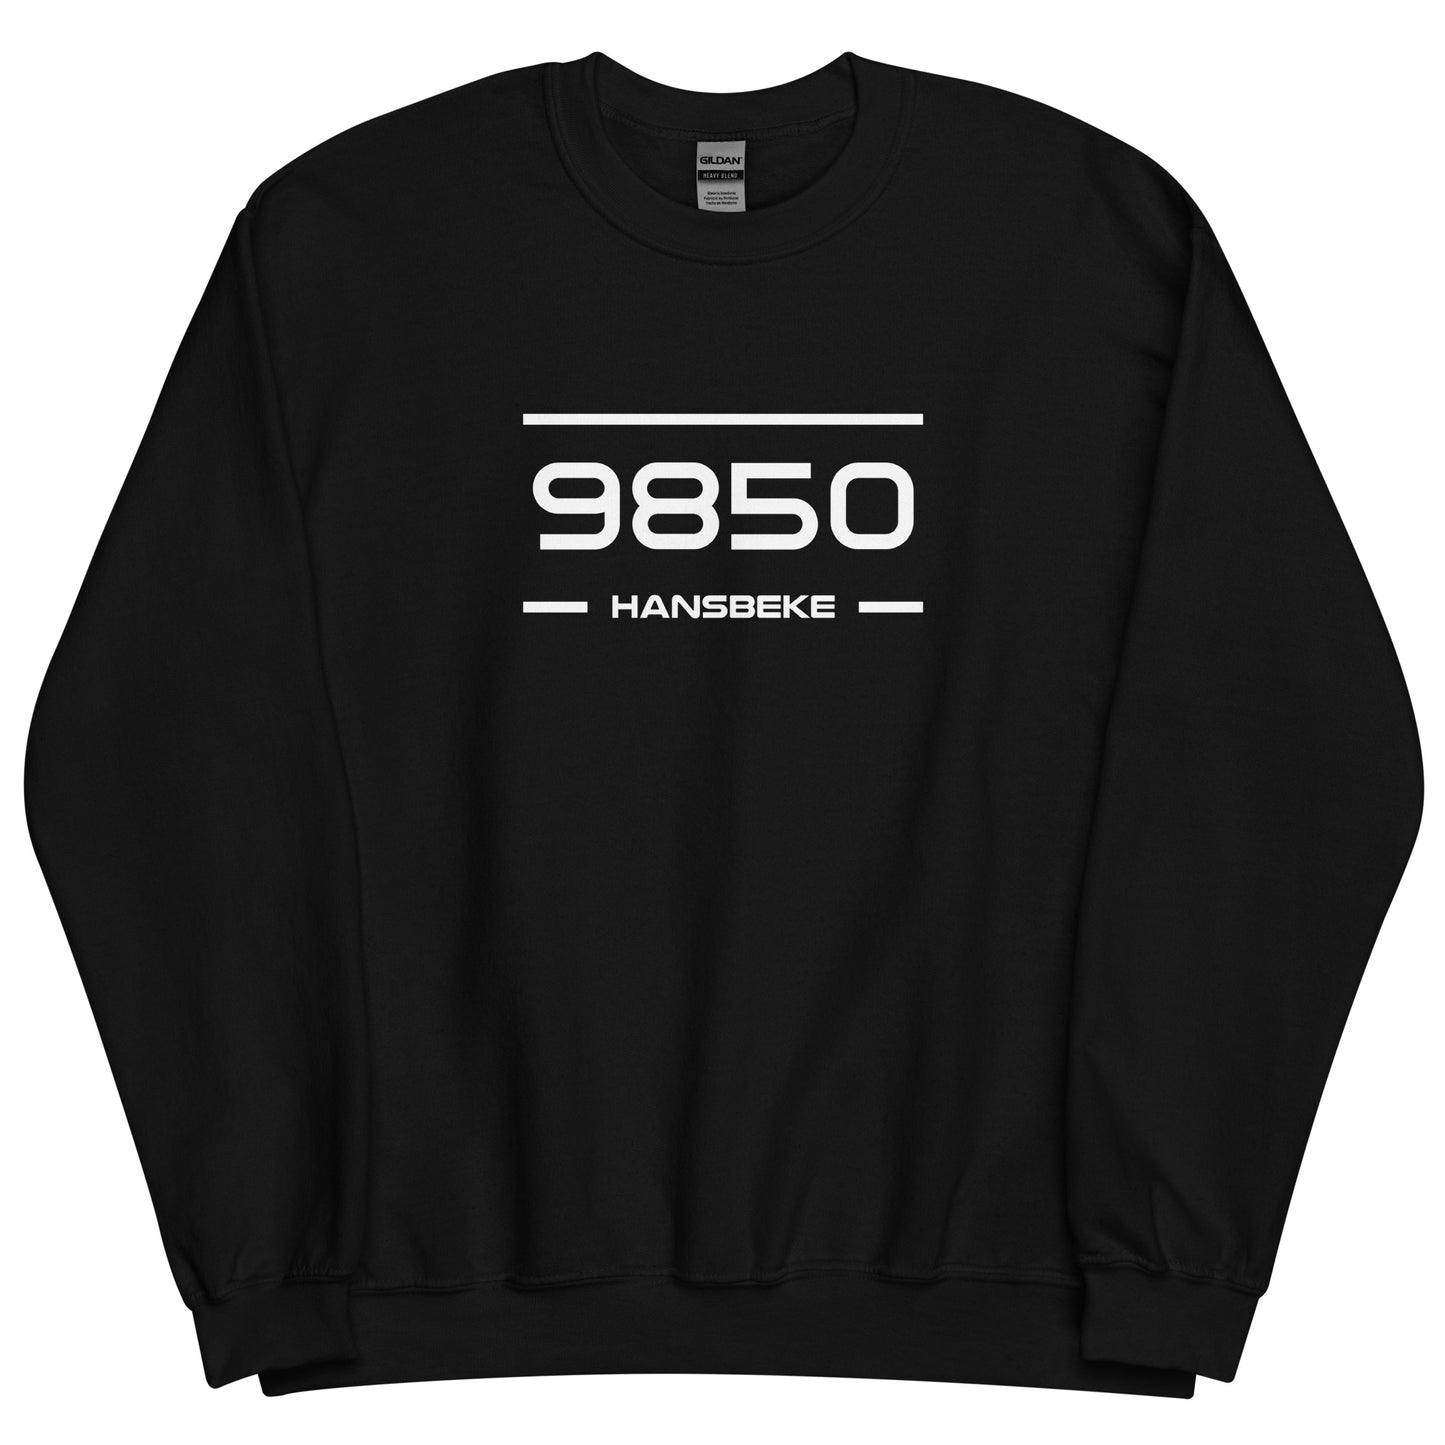 Sweater - 9850 - Hansbeke (M/V)